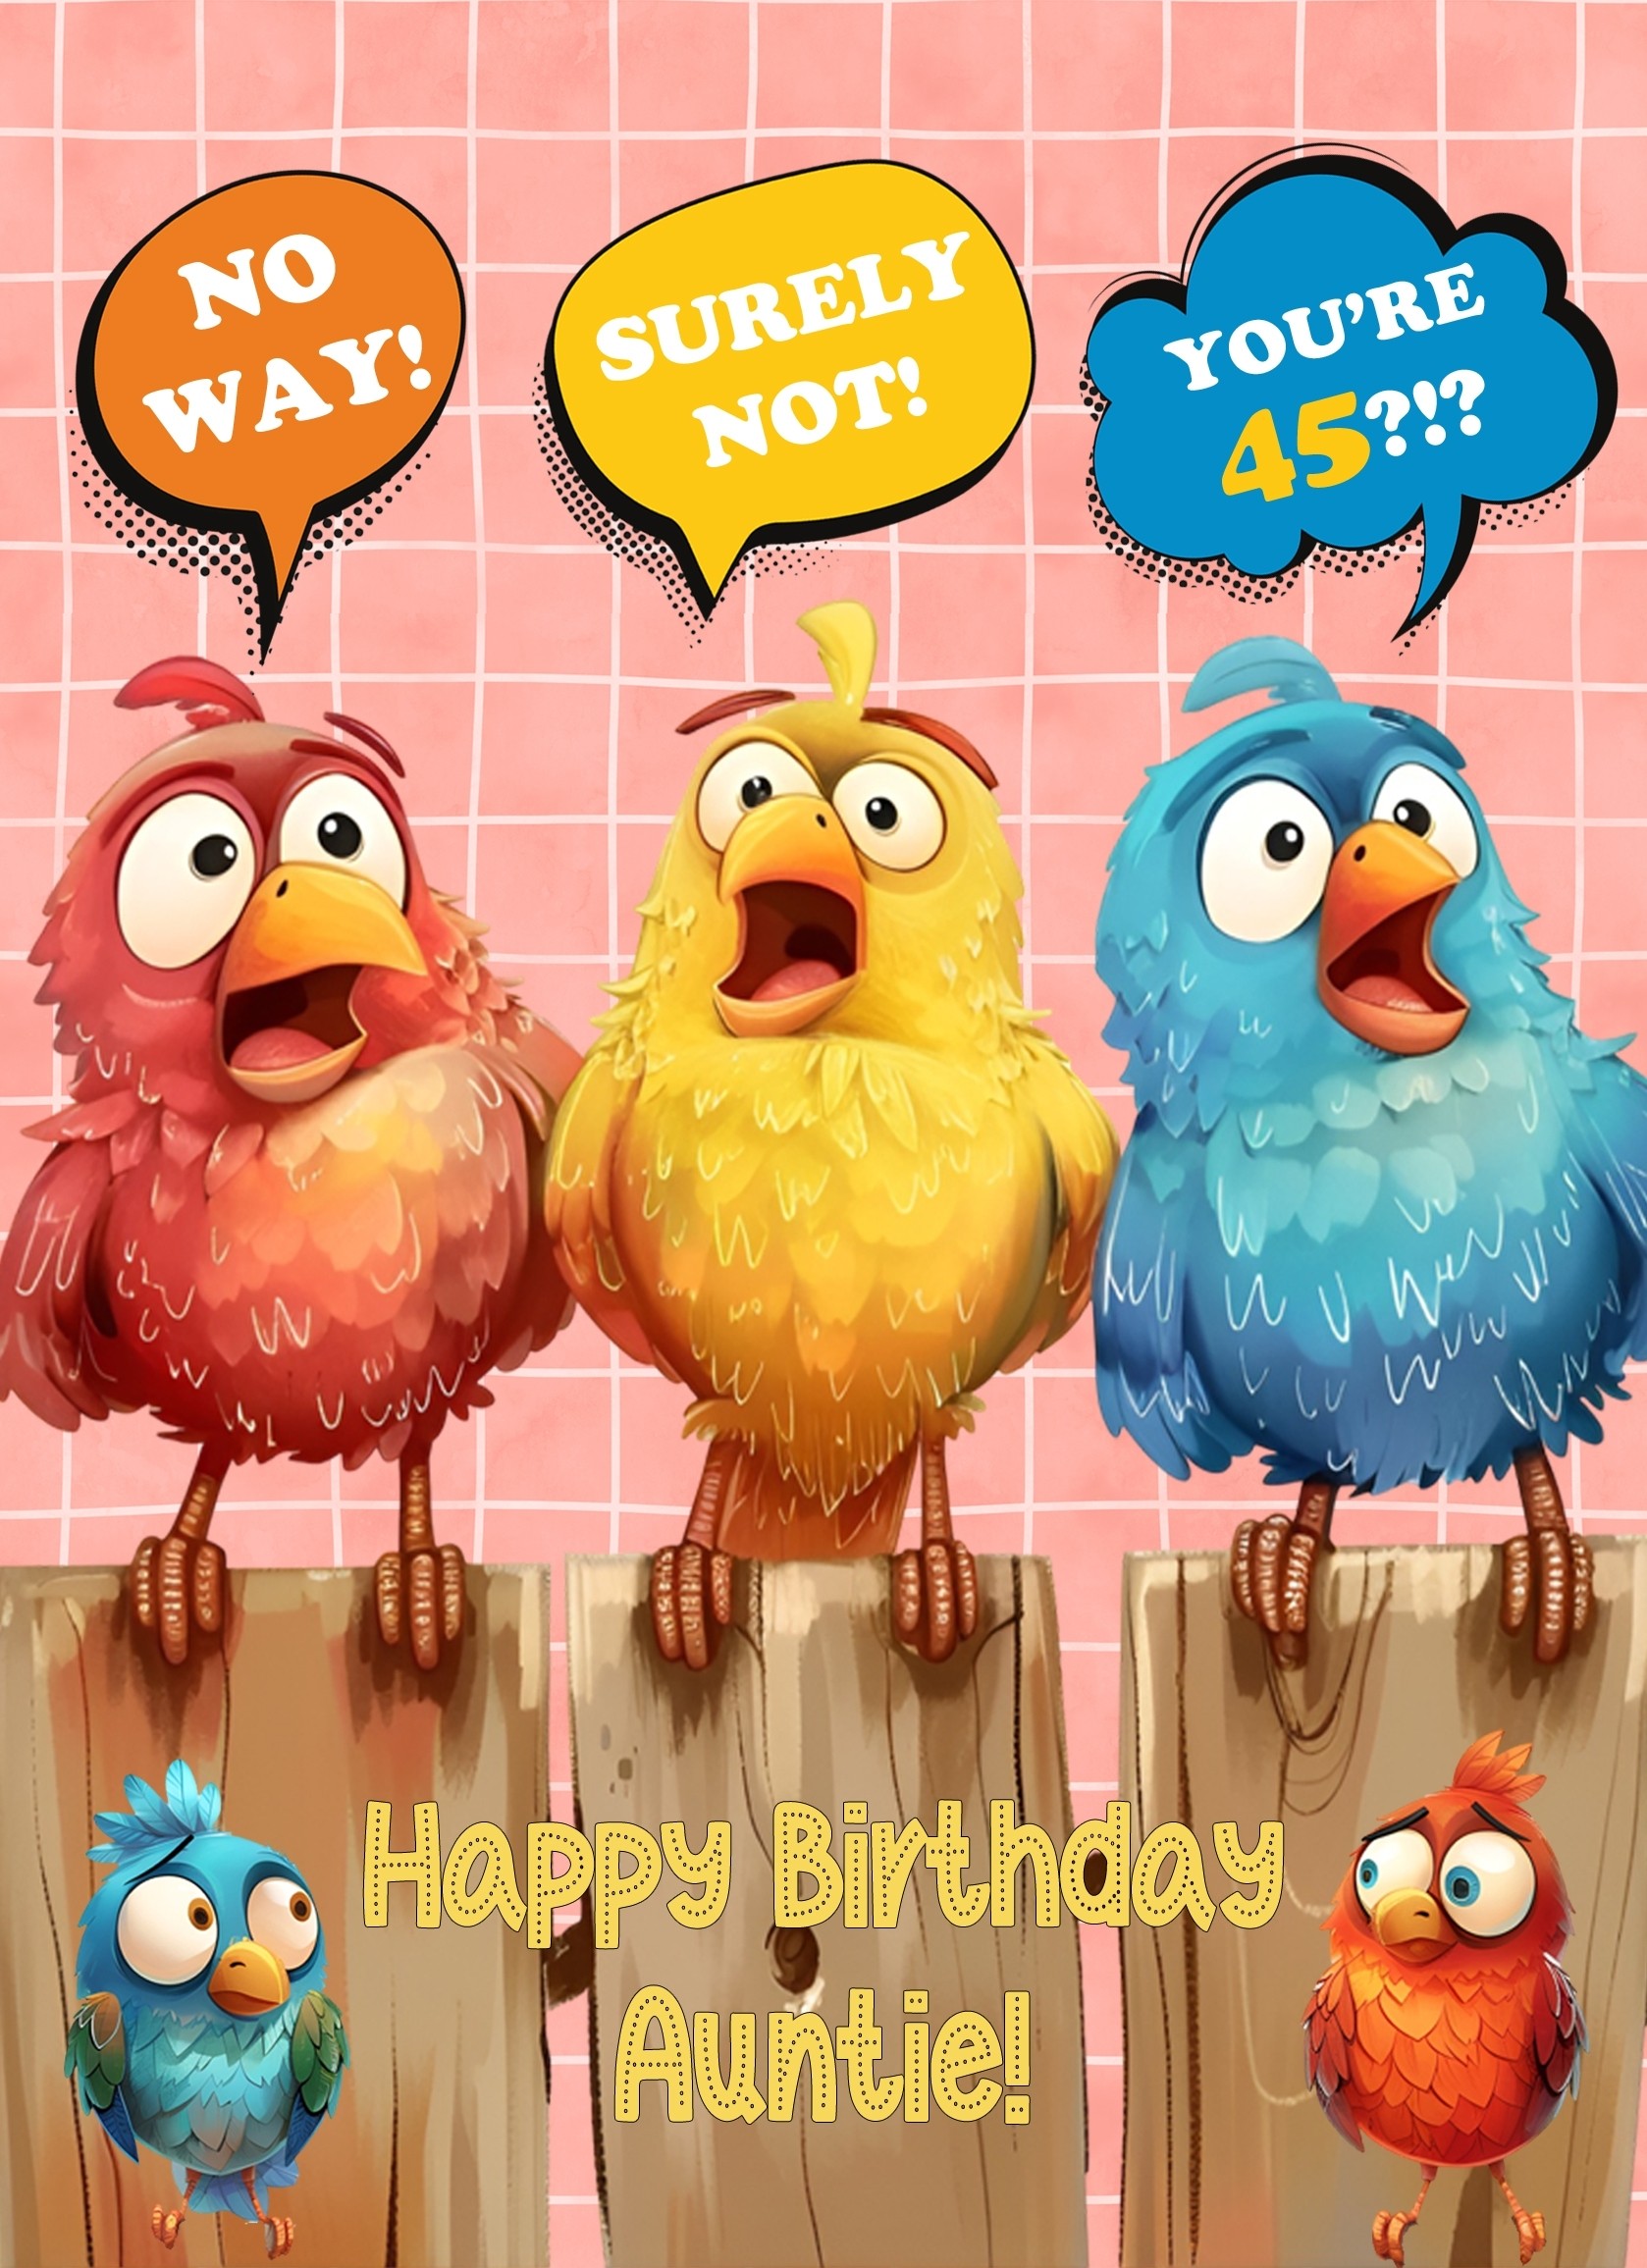 Auntie 45th Birthday Card (Funny Birds Surprised)